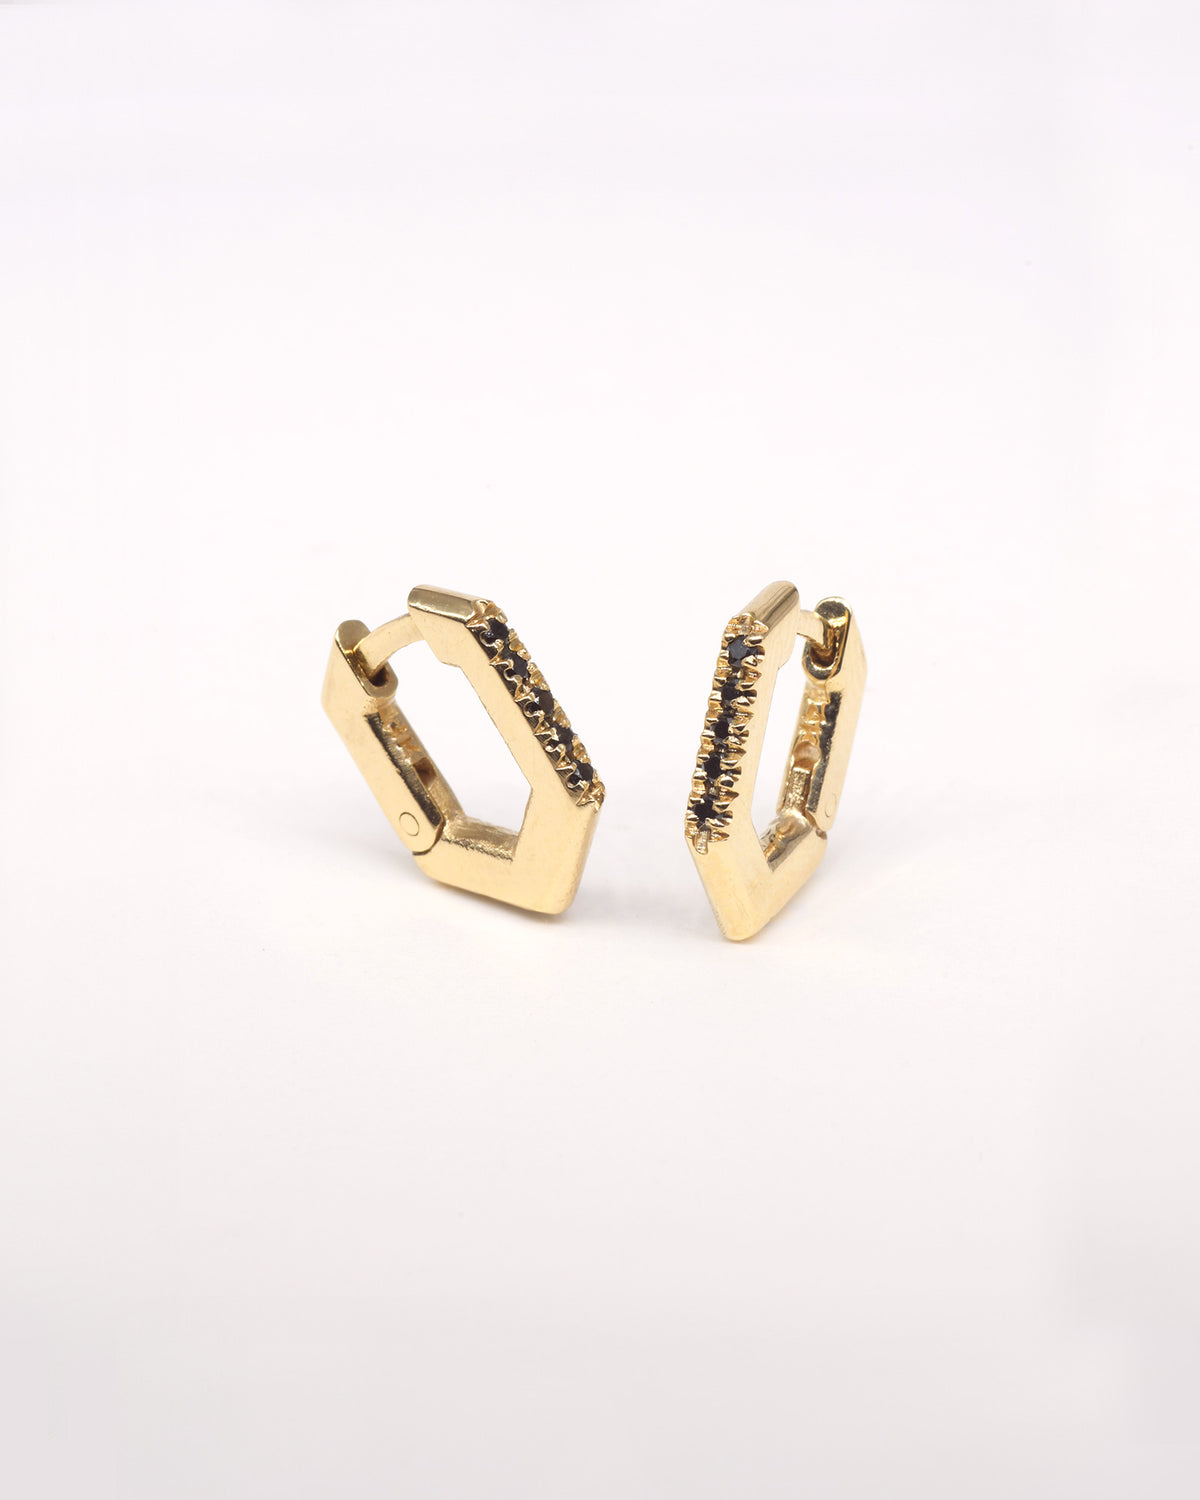 Alex Black Diamonds Earrings - Small